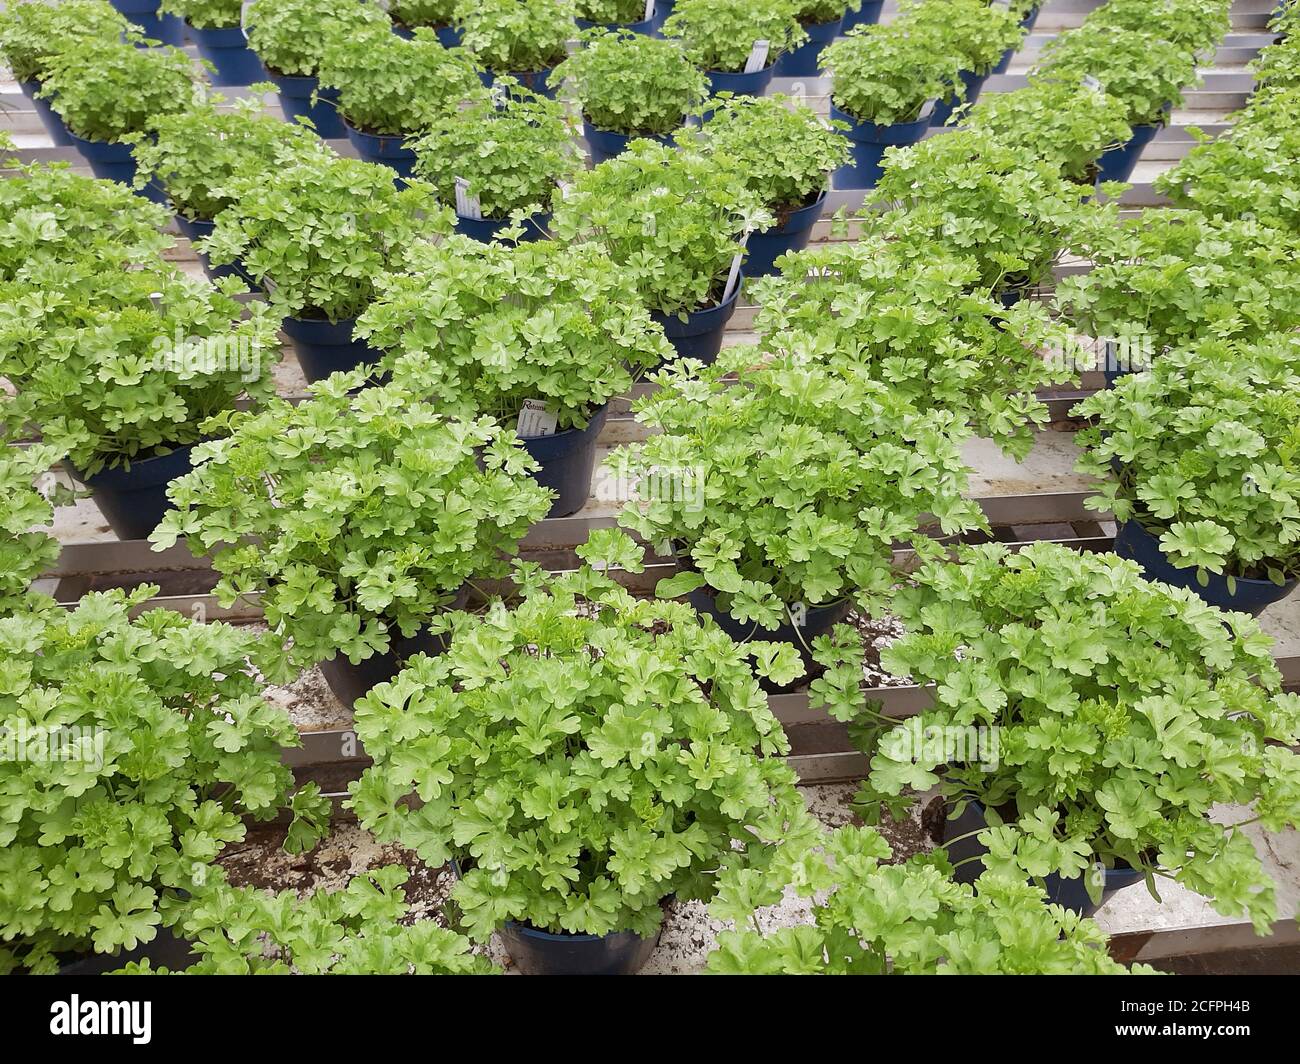 Curled parsley, Parsley (Petroselinum crispum), parsley in pots, kitchen herbs, Germany Stock Photo